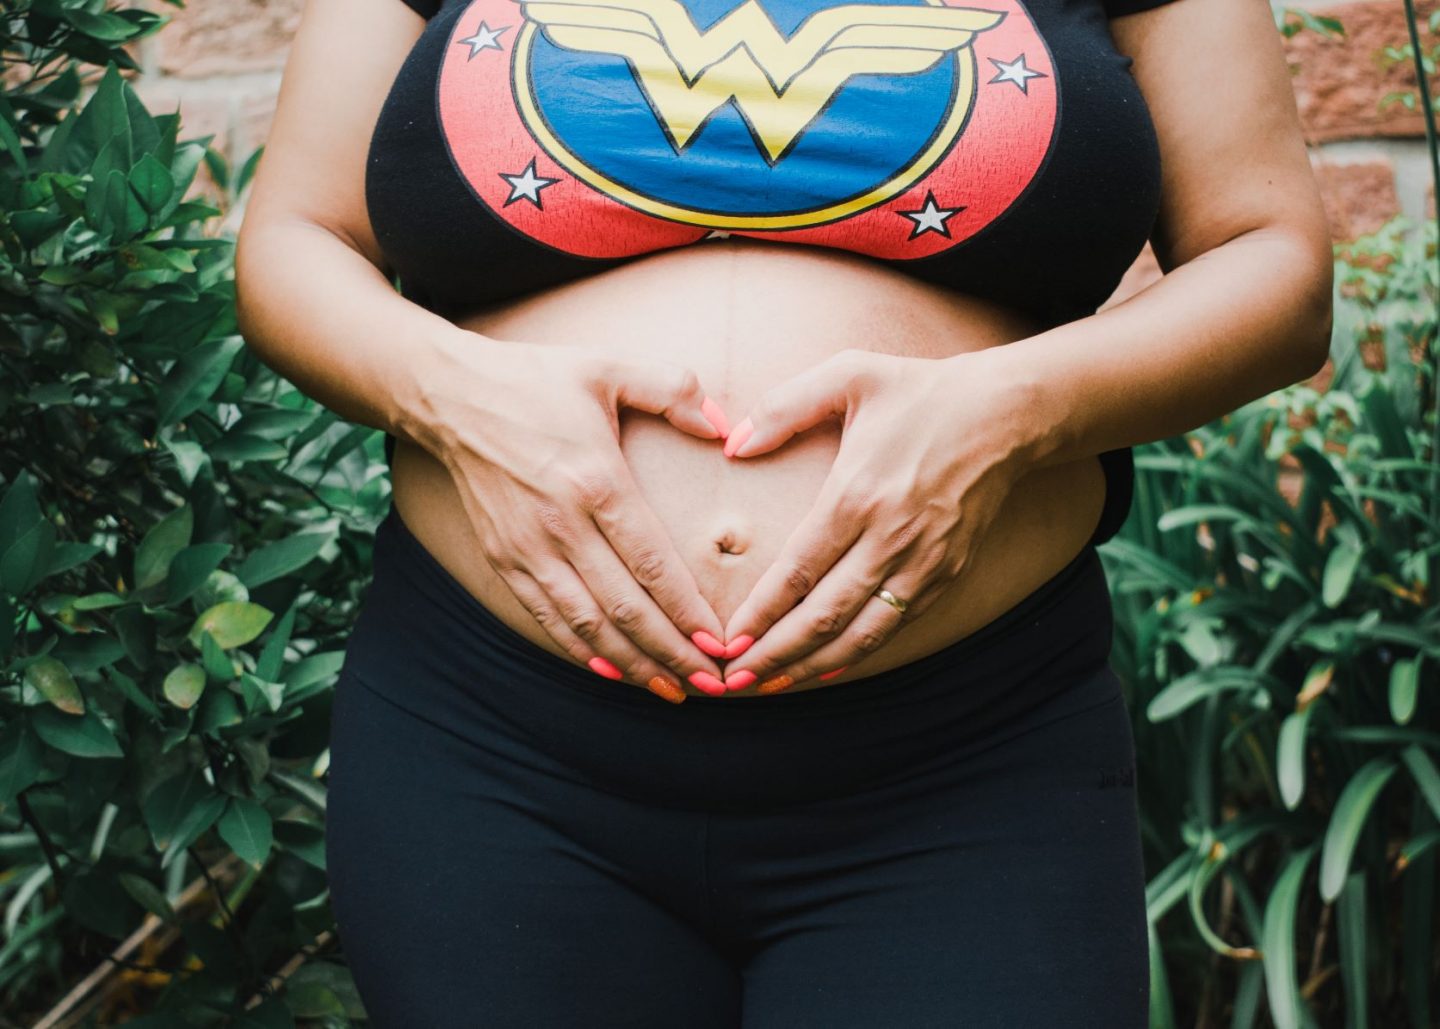 How pregnancy makes you like a superhero